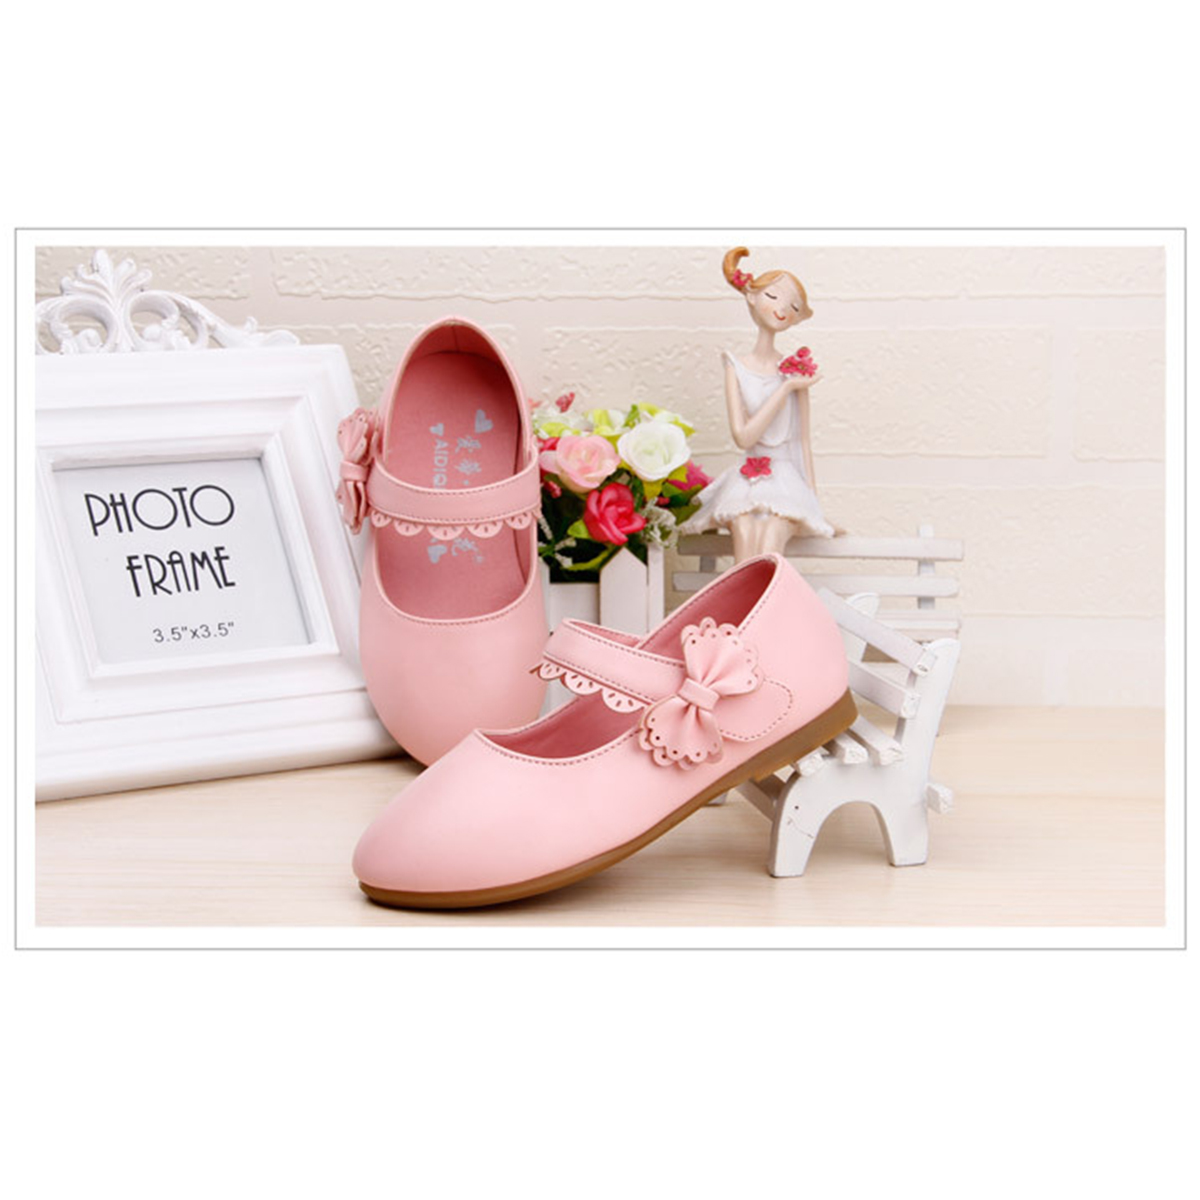 Hawee Ballet Flat Mary Jane Shoes Bowknot Princess Dress Shoes (Toddler Girls & Little Girls & Big Girls) - image 4 of 4